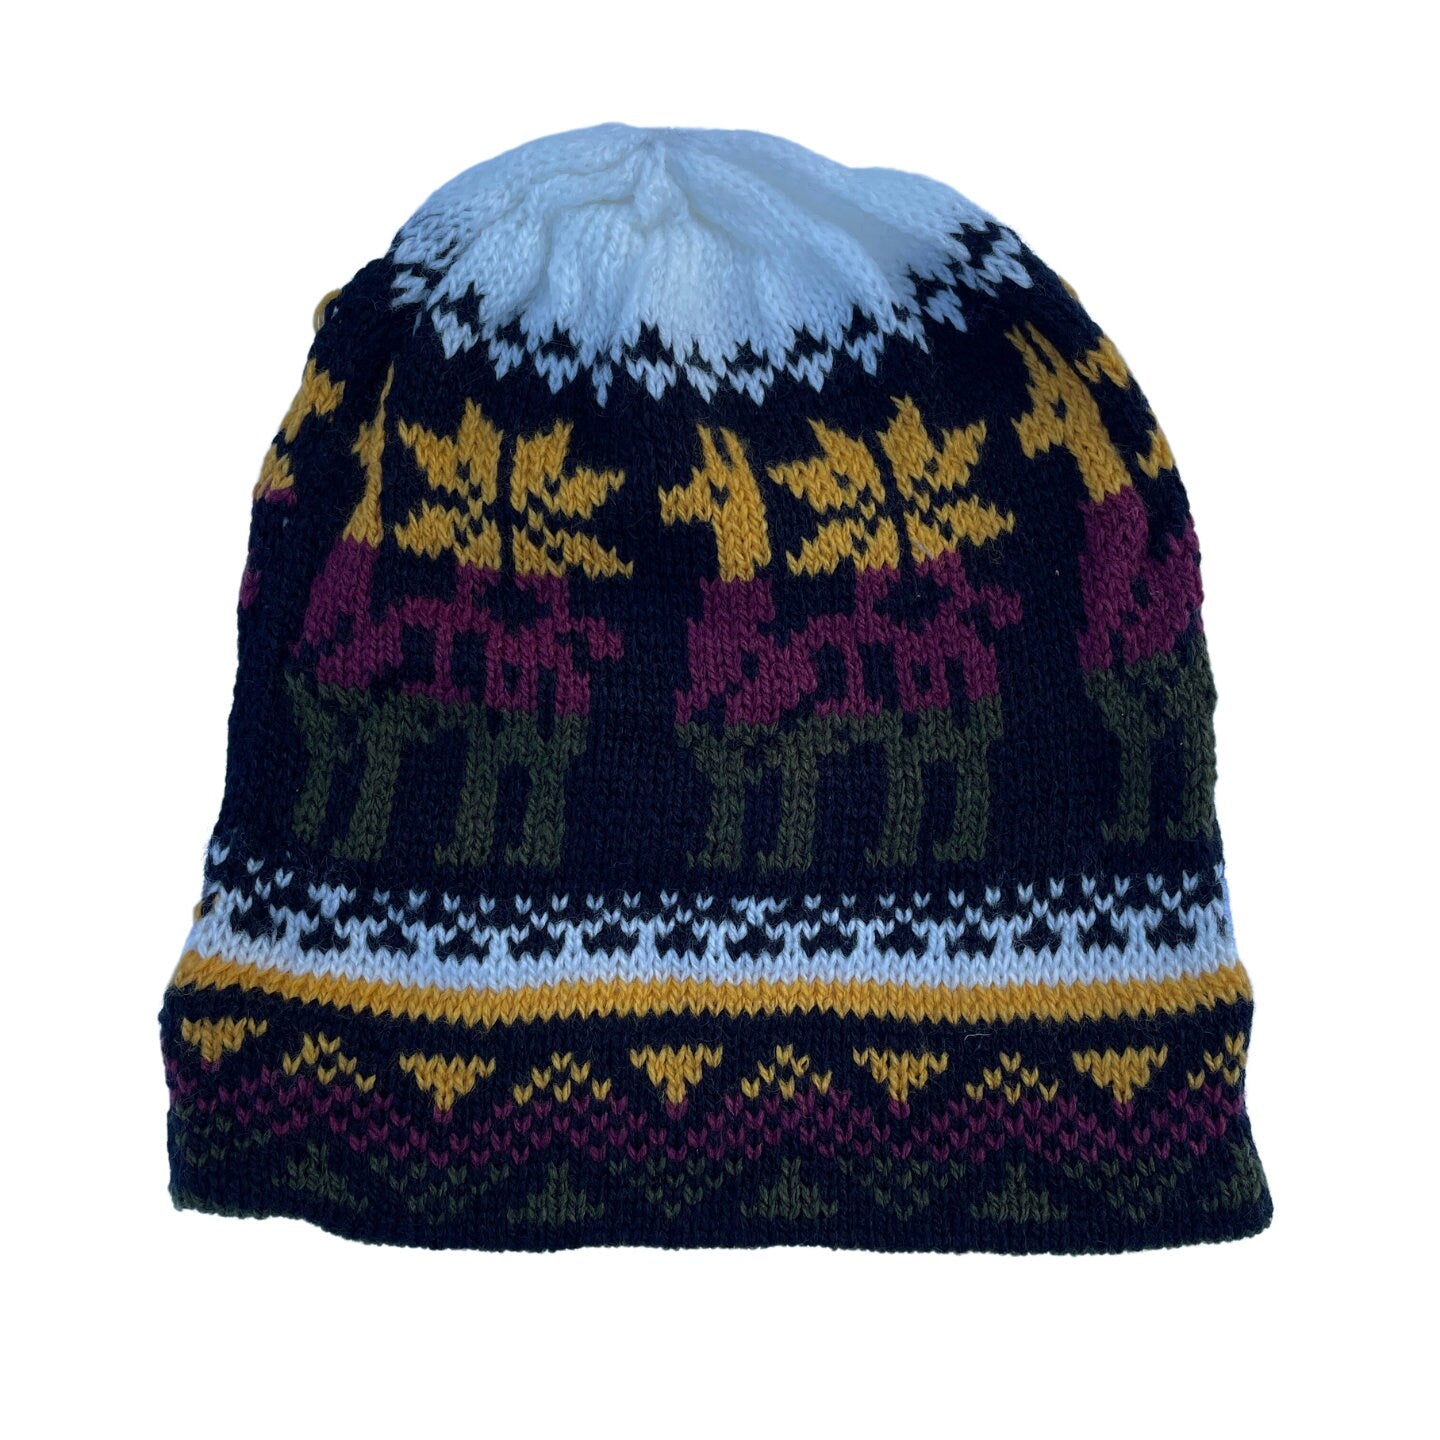 Knitted Alpaca Beanie Hat | Llama White Black Purple